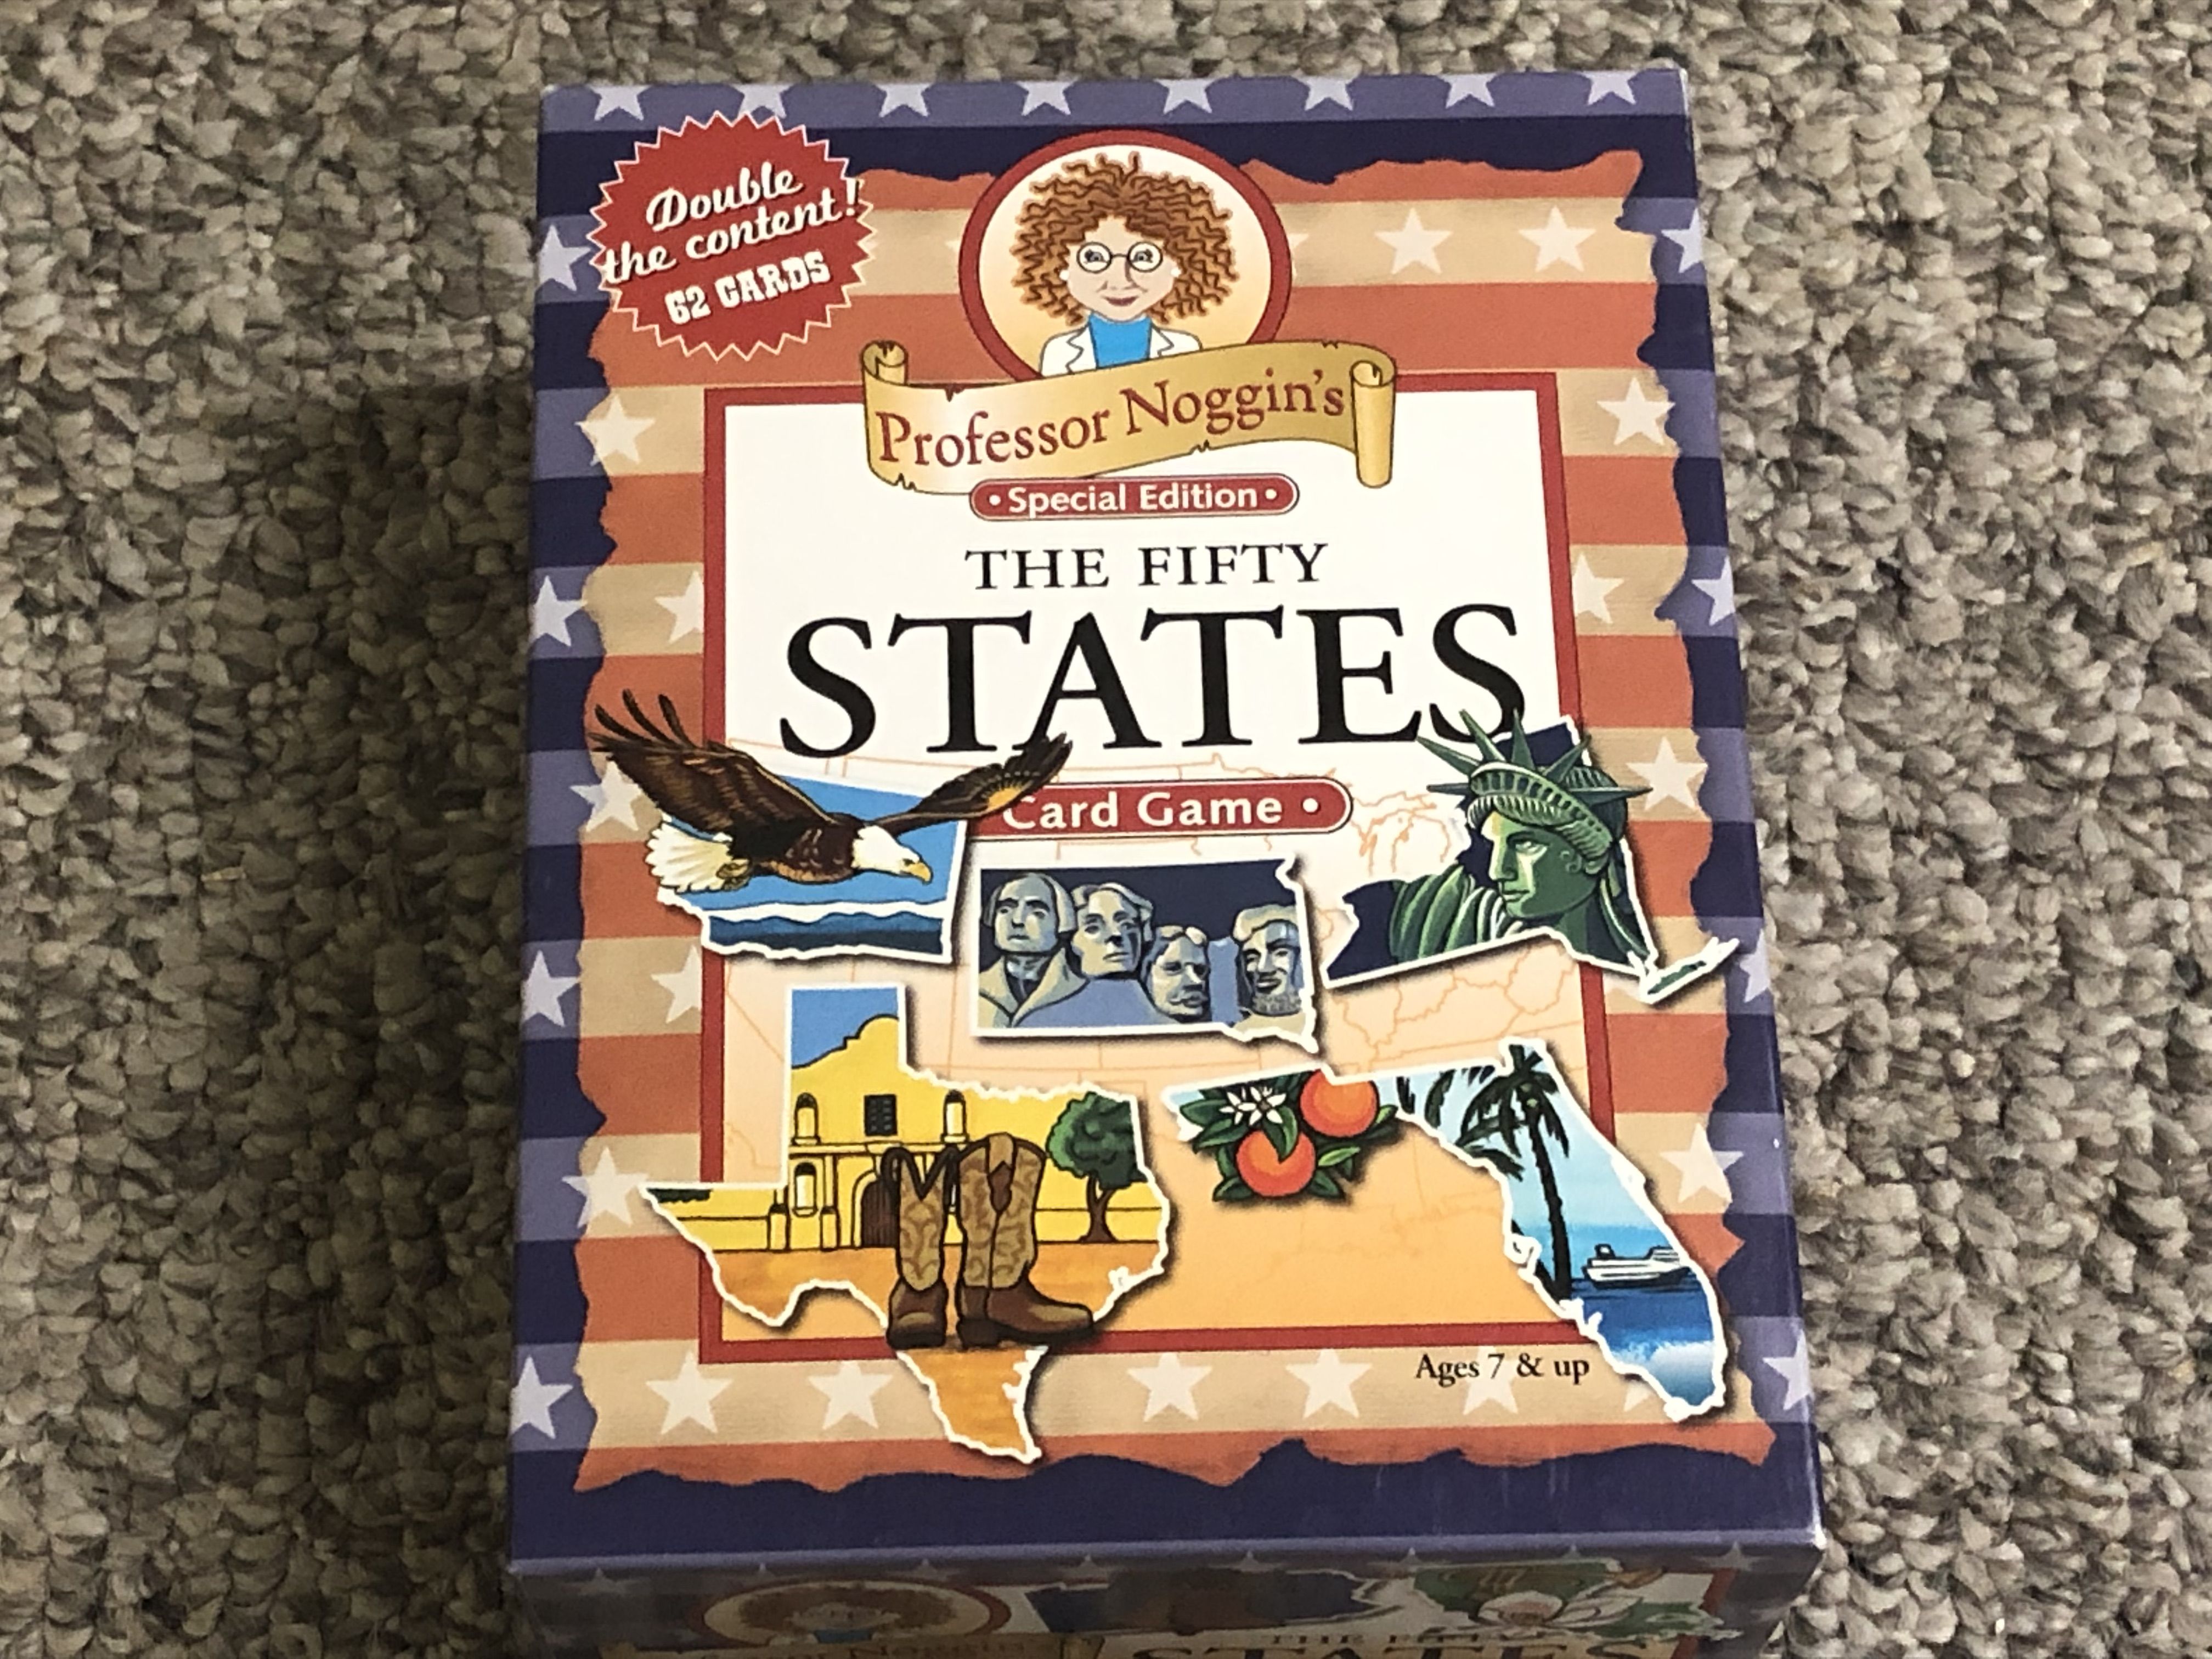 Professor Noggin's The Fifty States Card Game